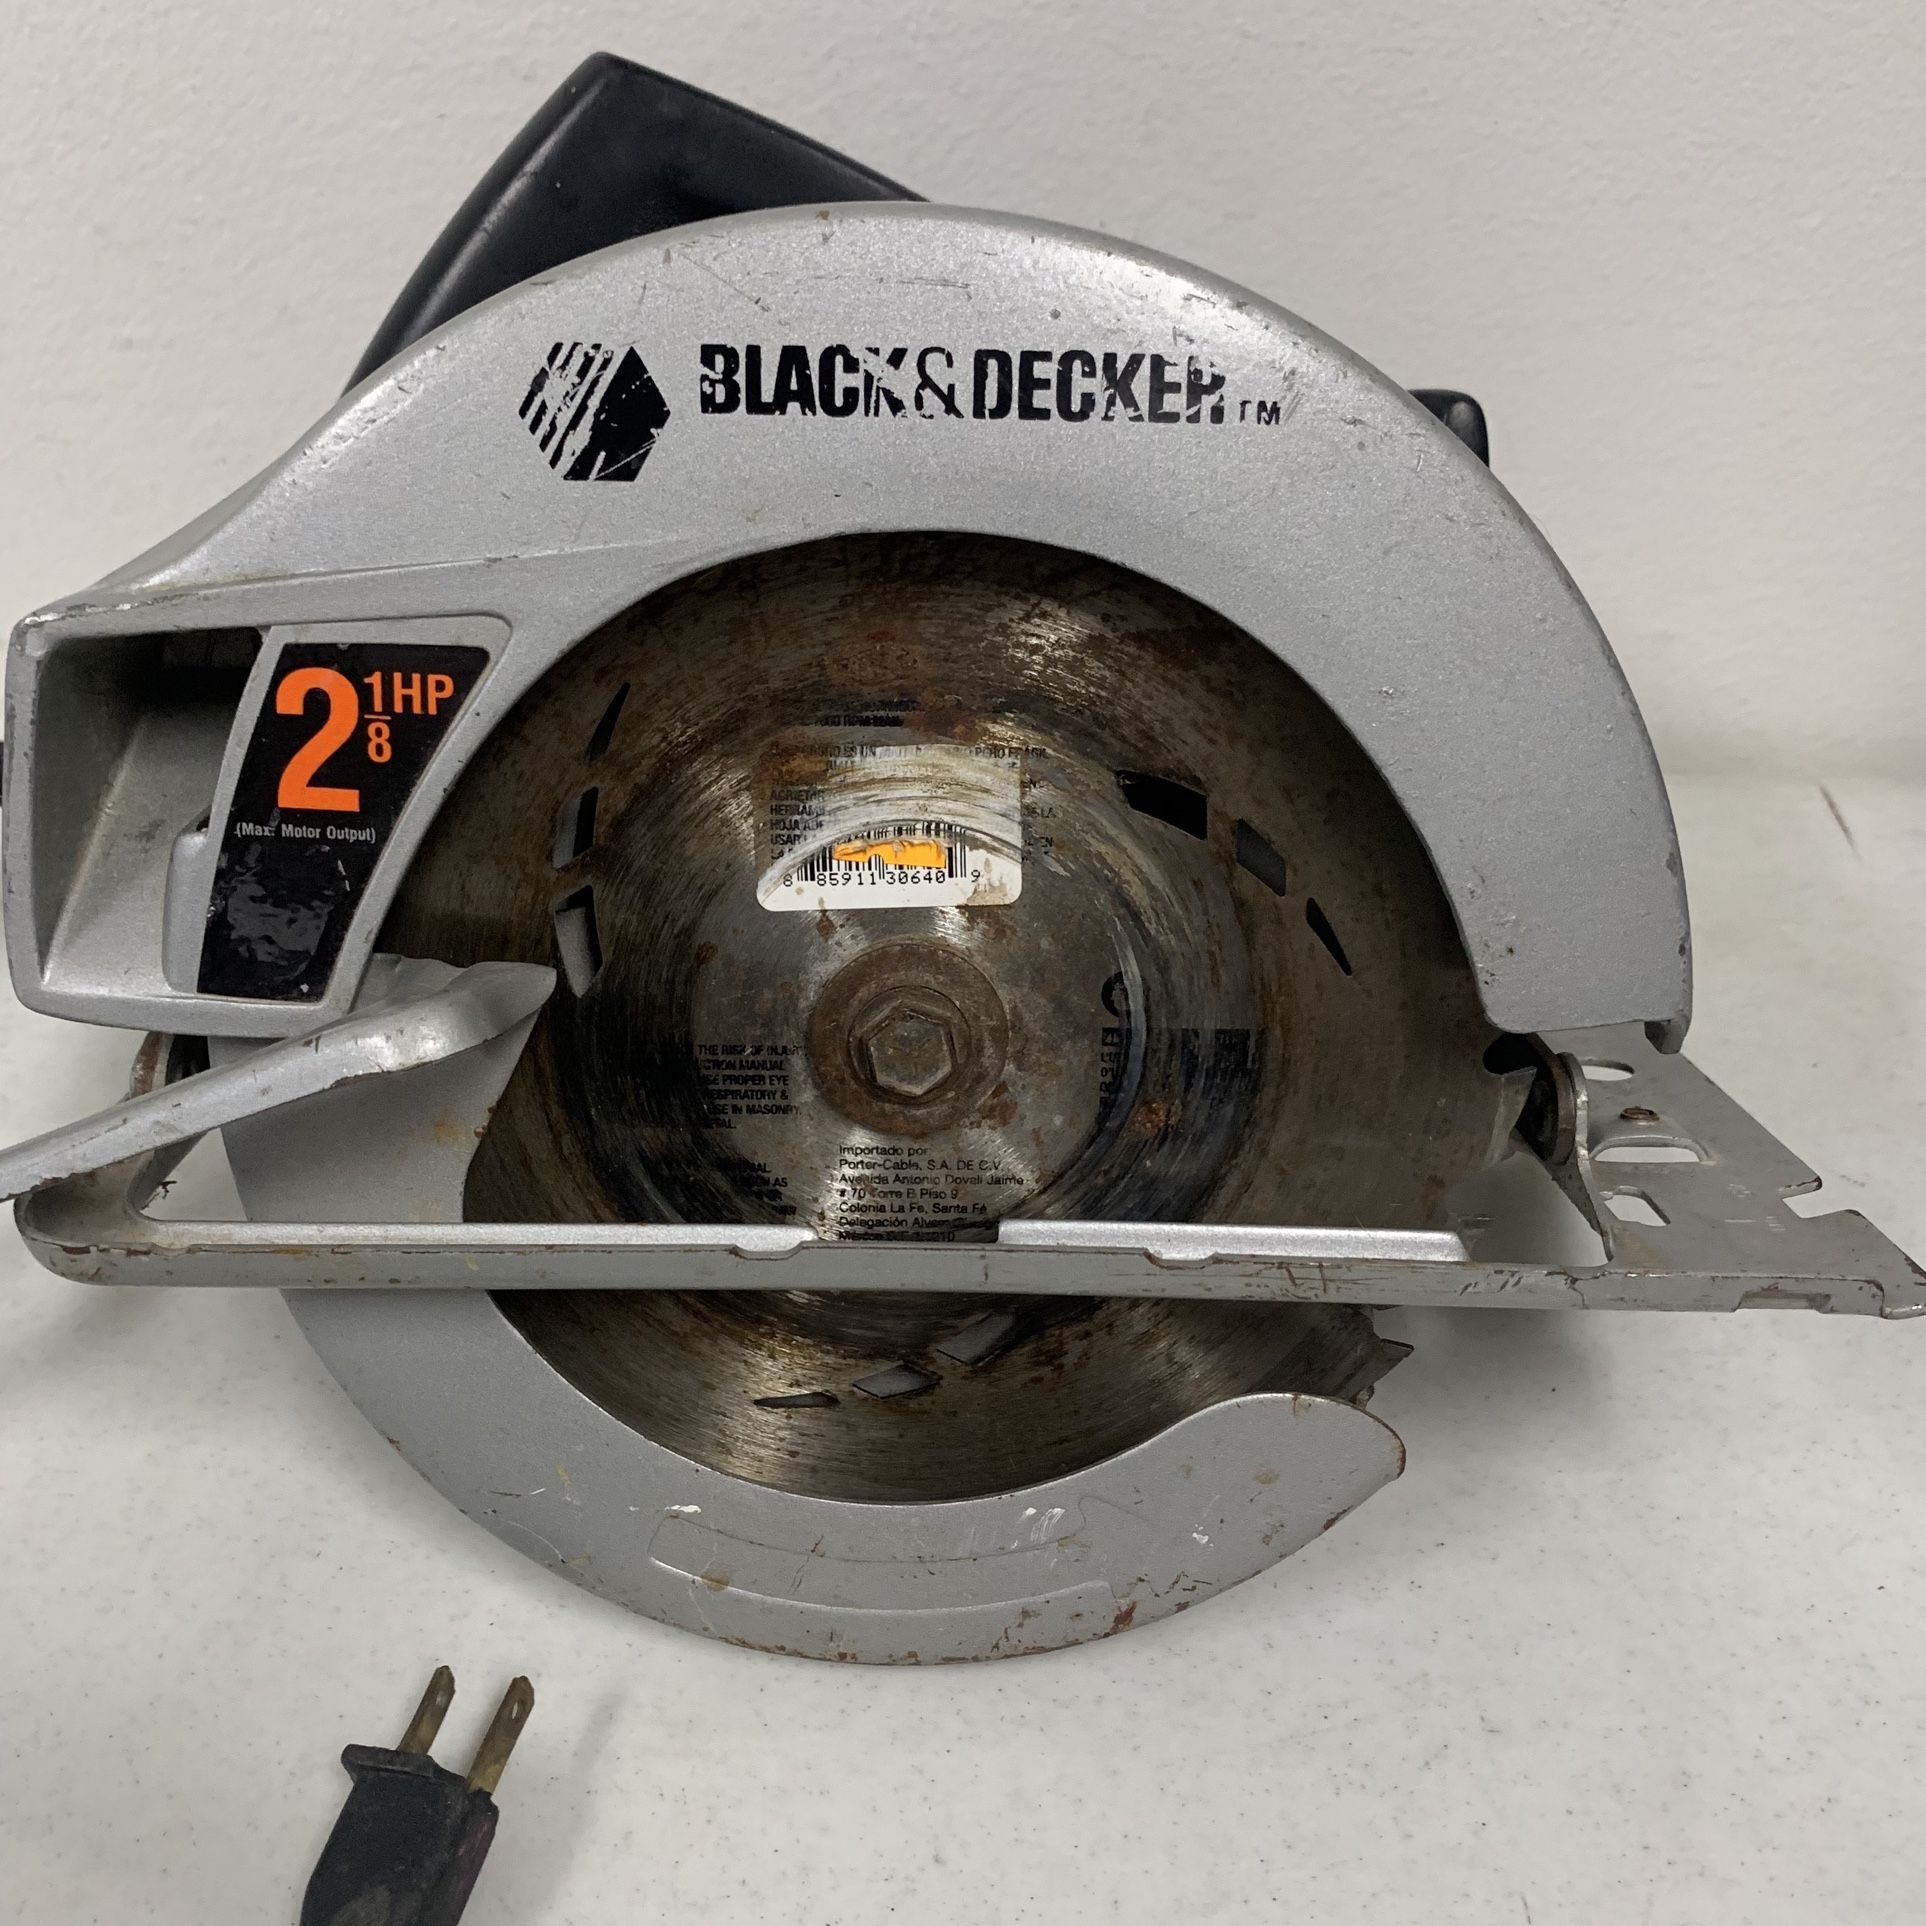 Black & Decker 2 1/8 HP Circular Saw for Sale in San Jose, CA - OfferUp